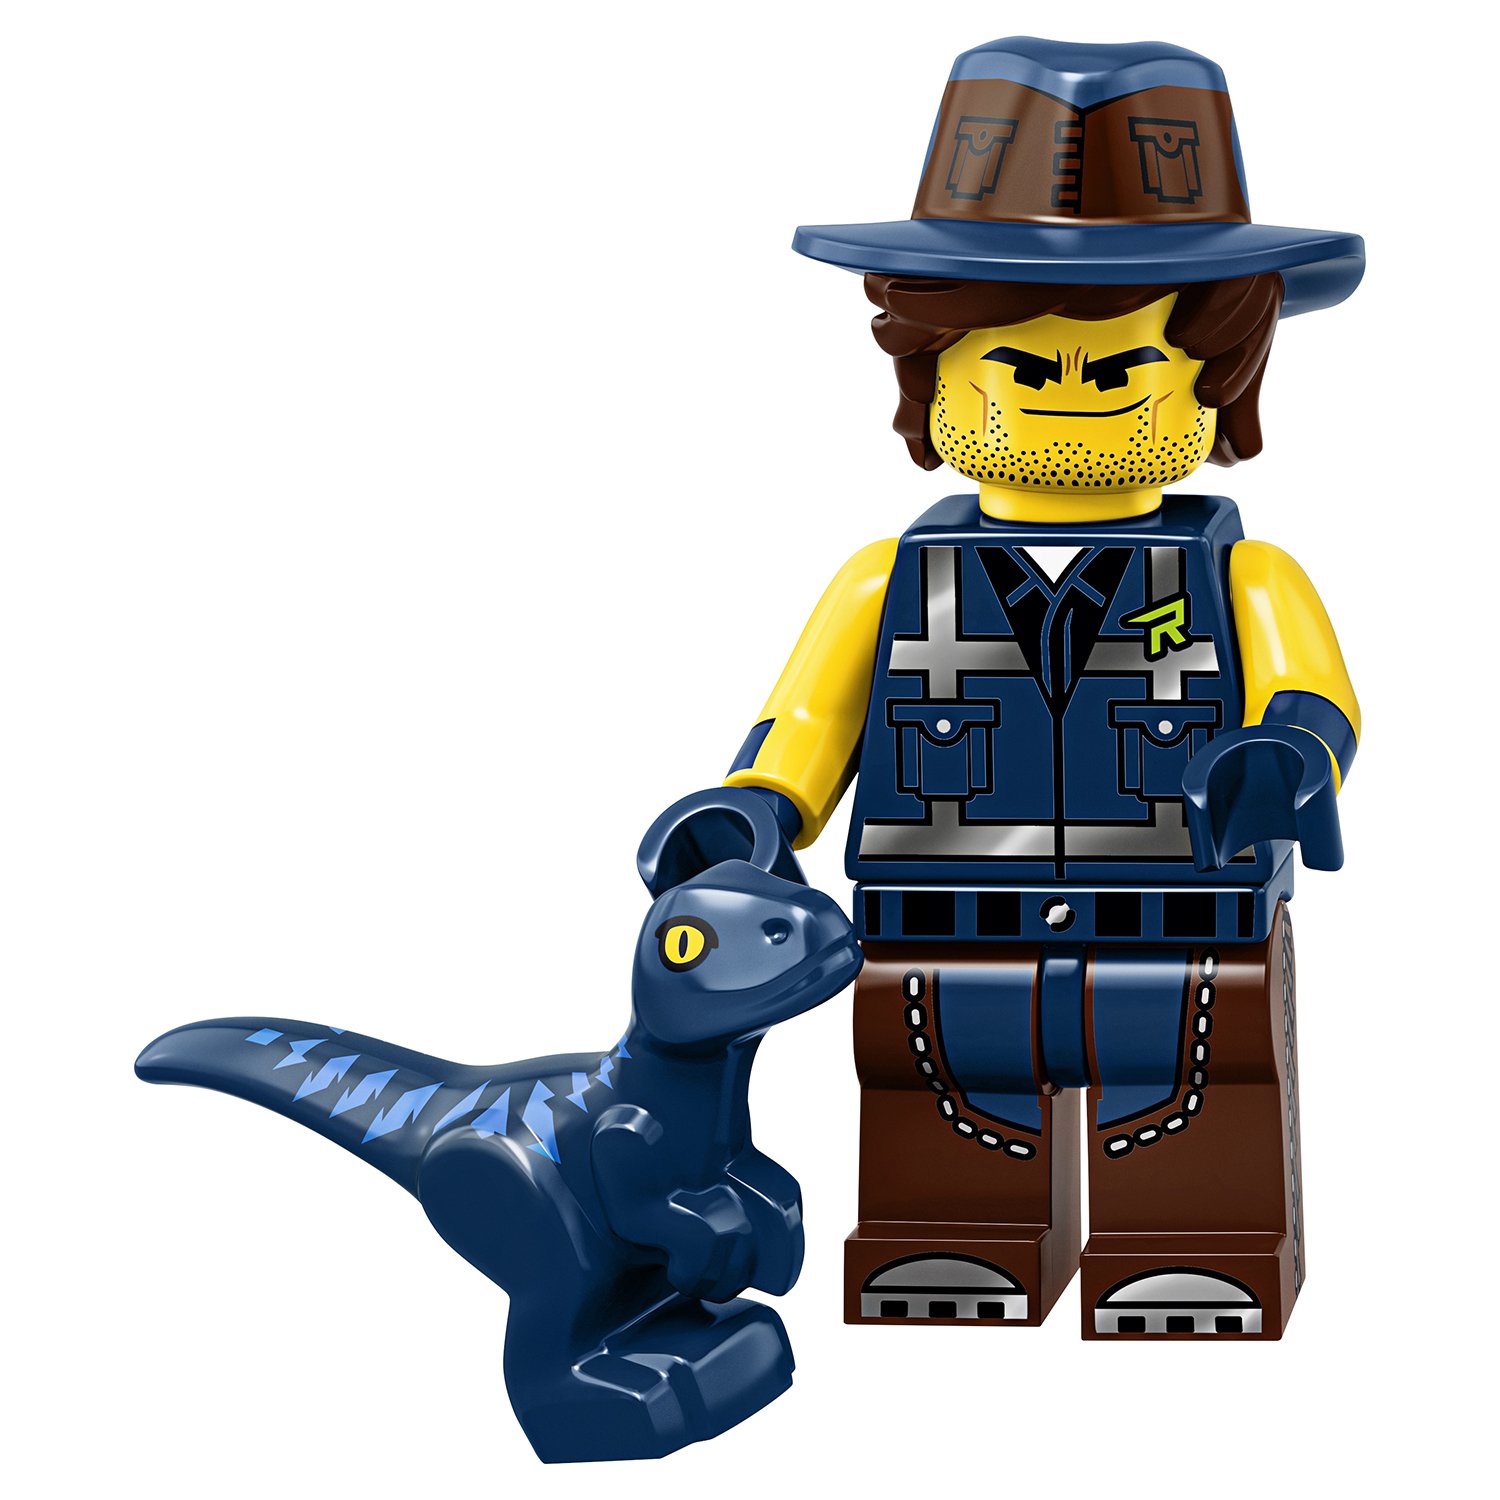 Lego Minifigures 71023-15 Lego Movie 2 Рекс и его друг